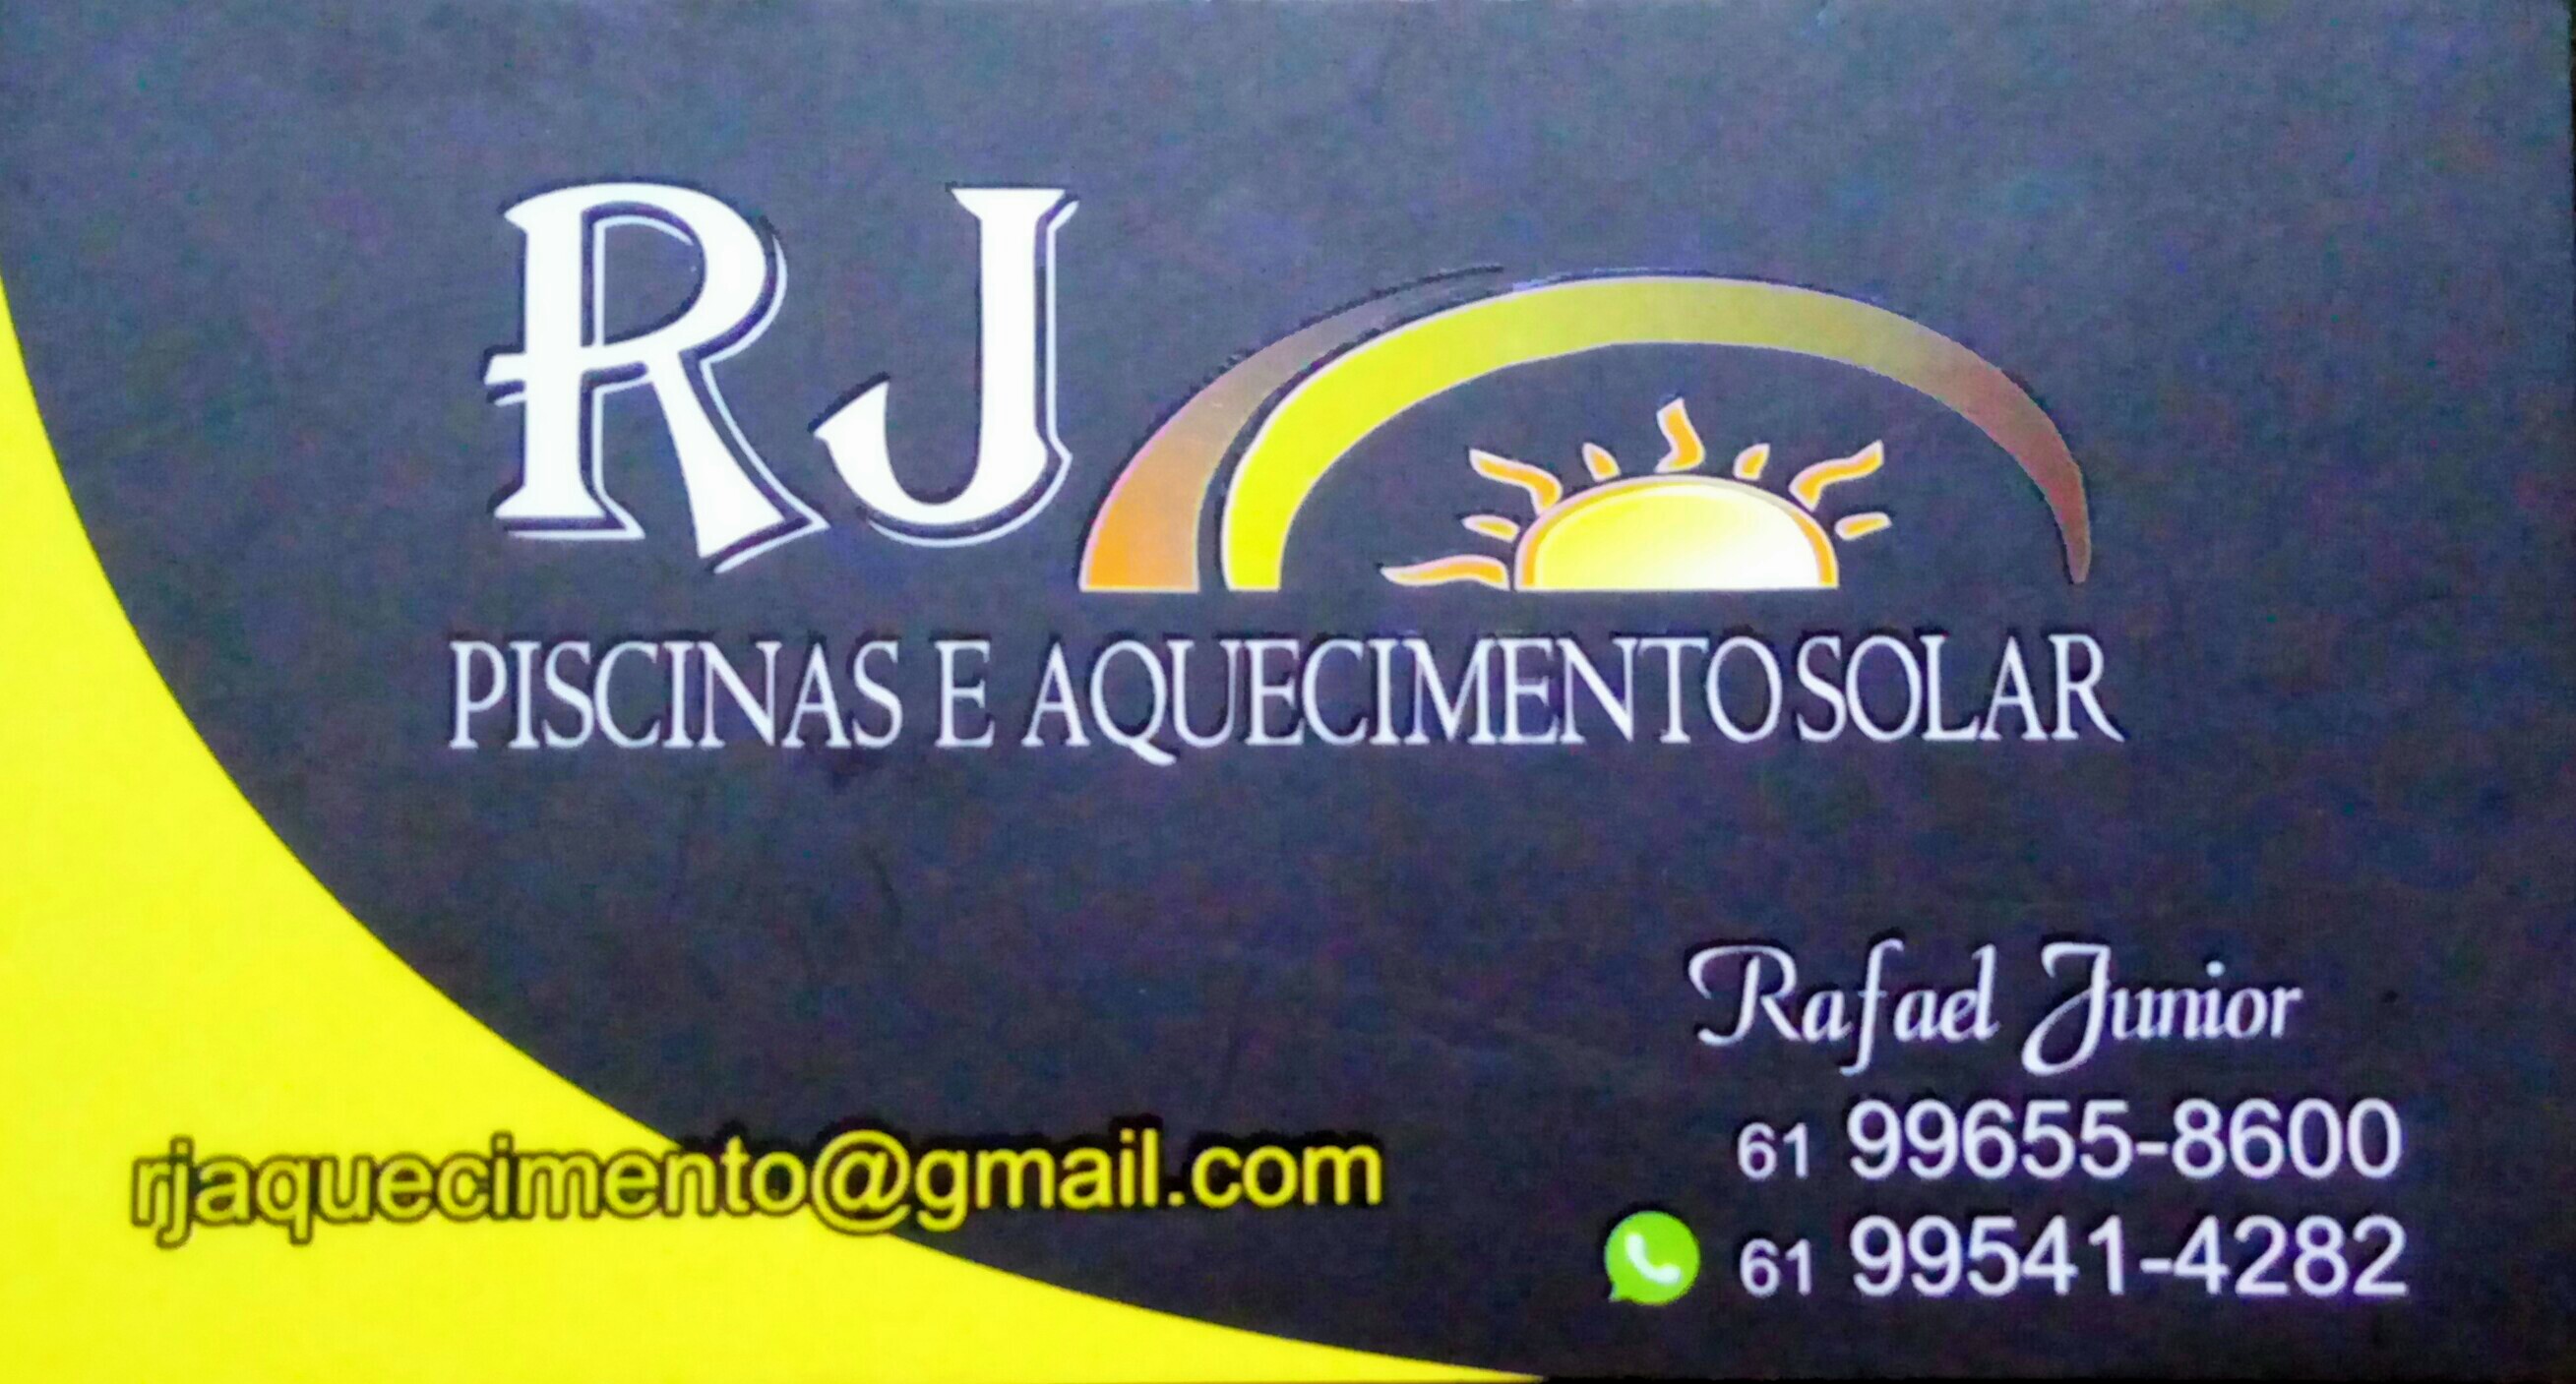 RJ AQUECIMENTO SOLAR PISCINA - Brasília, DF